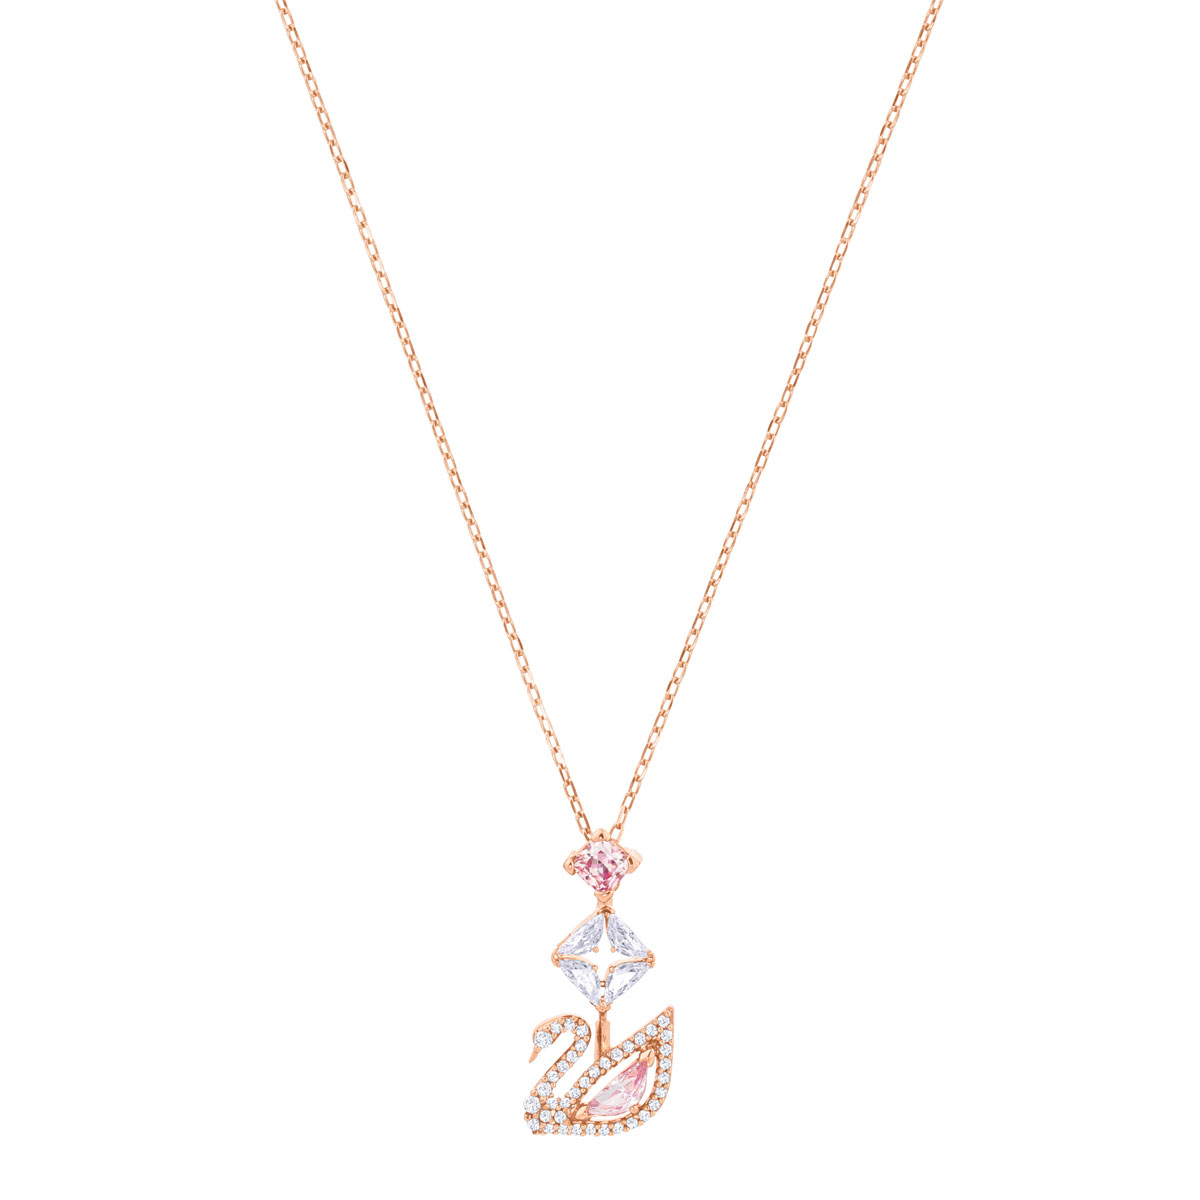 Swarovski Dazzling Swan Y Necklace, Multi Colored, Rose Gold